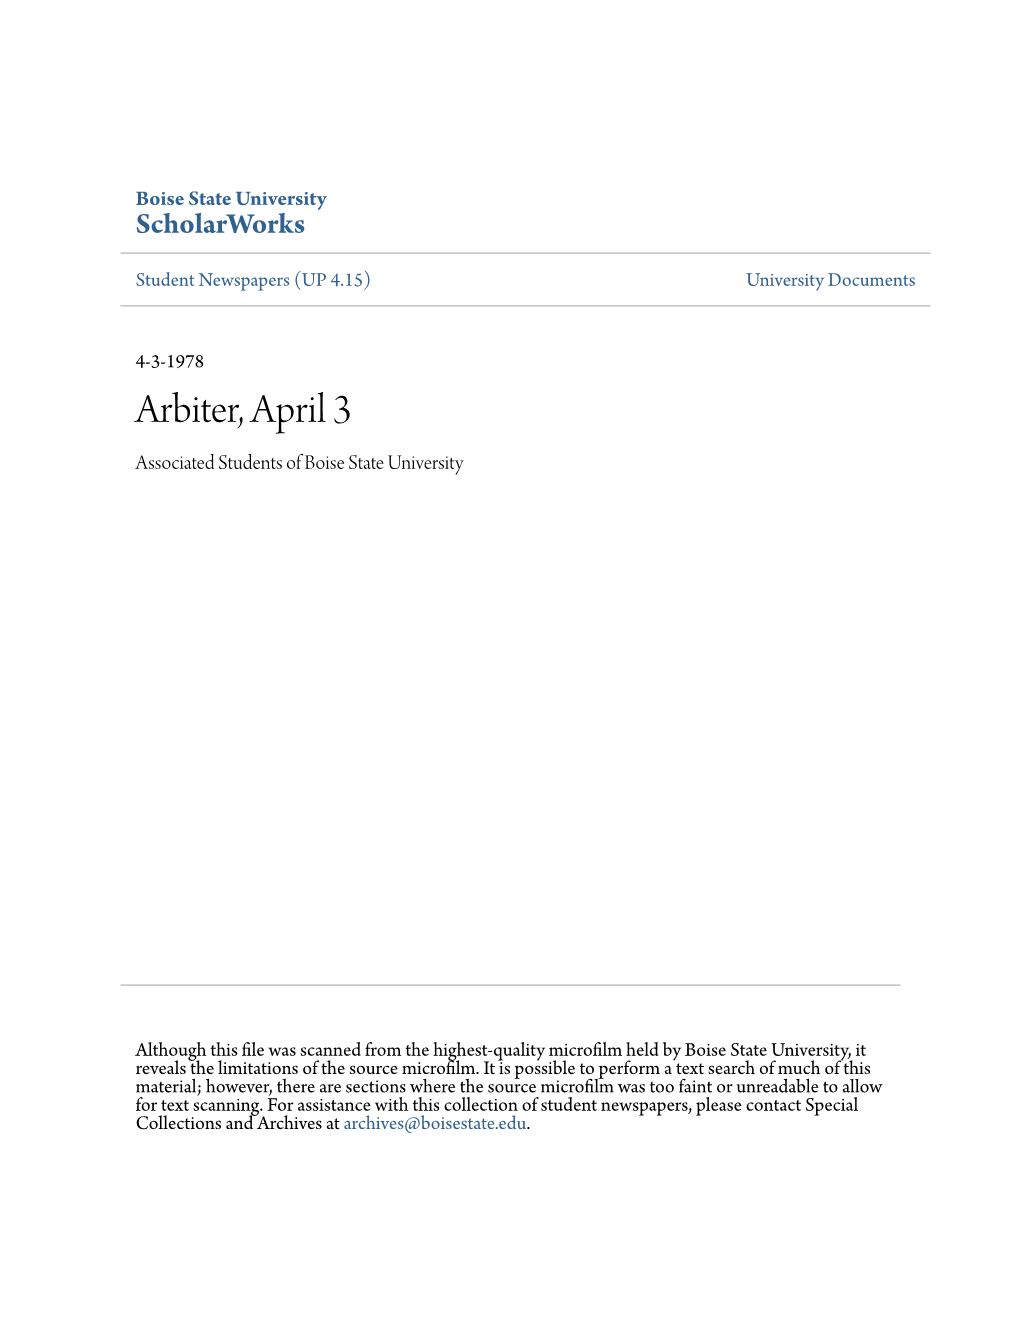 Arbiter, April 3 Associated Students of Boise State University